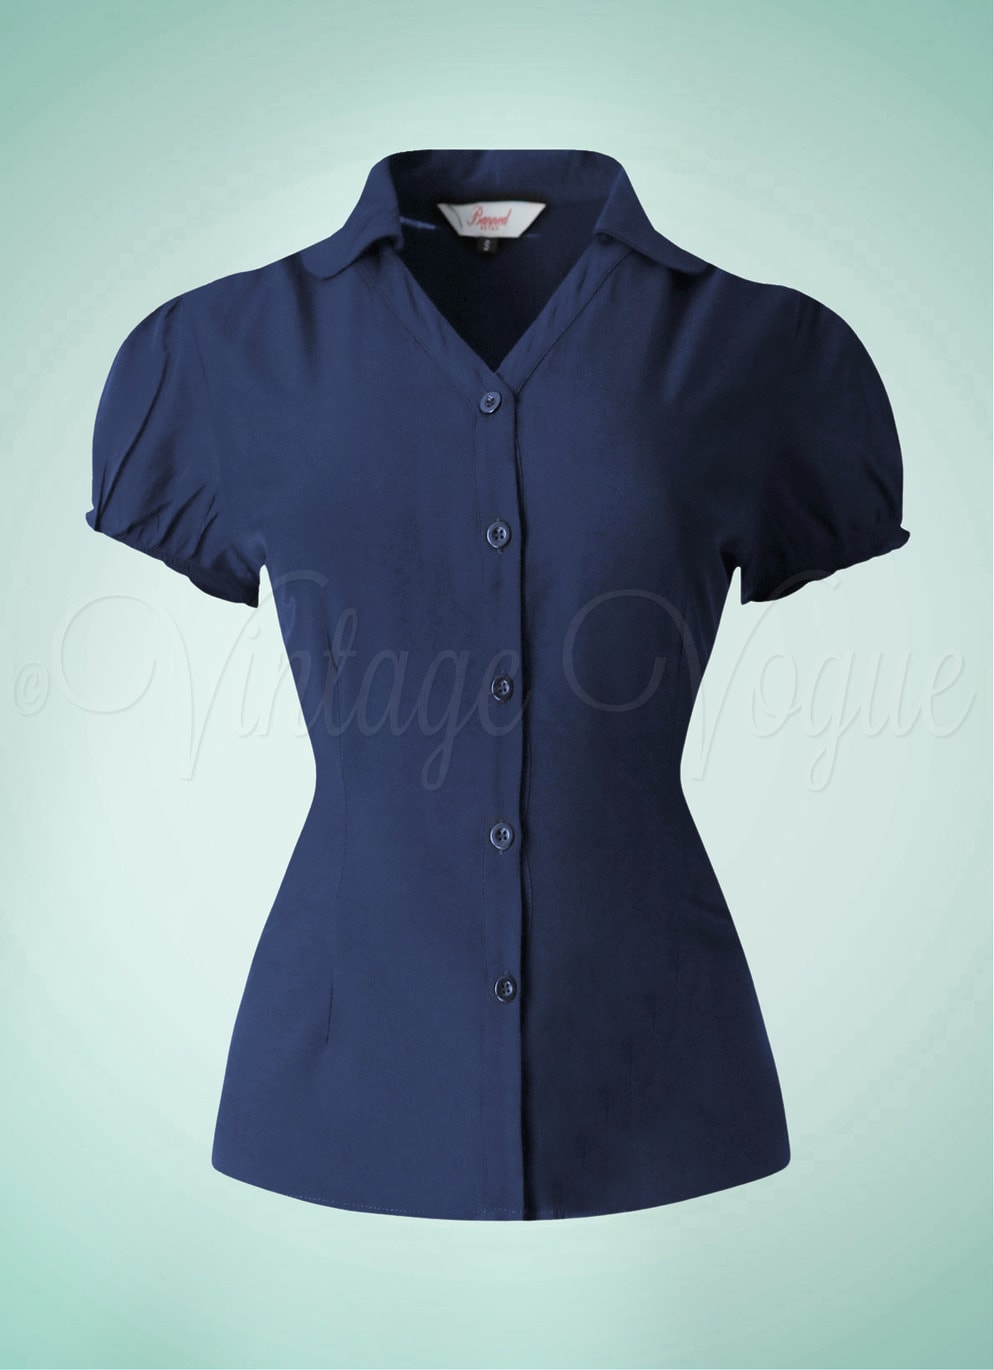 Banned Banned Retro Vintage Basic Bluse Jane Blouse in Navy Blau BL14147-NVY